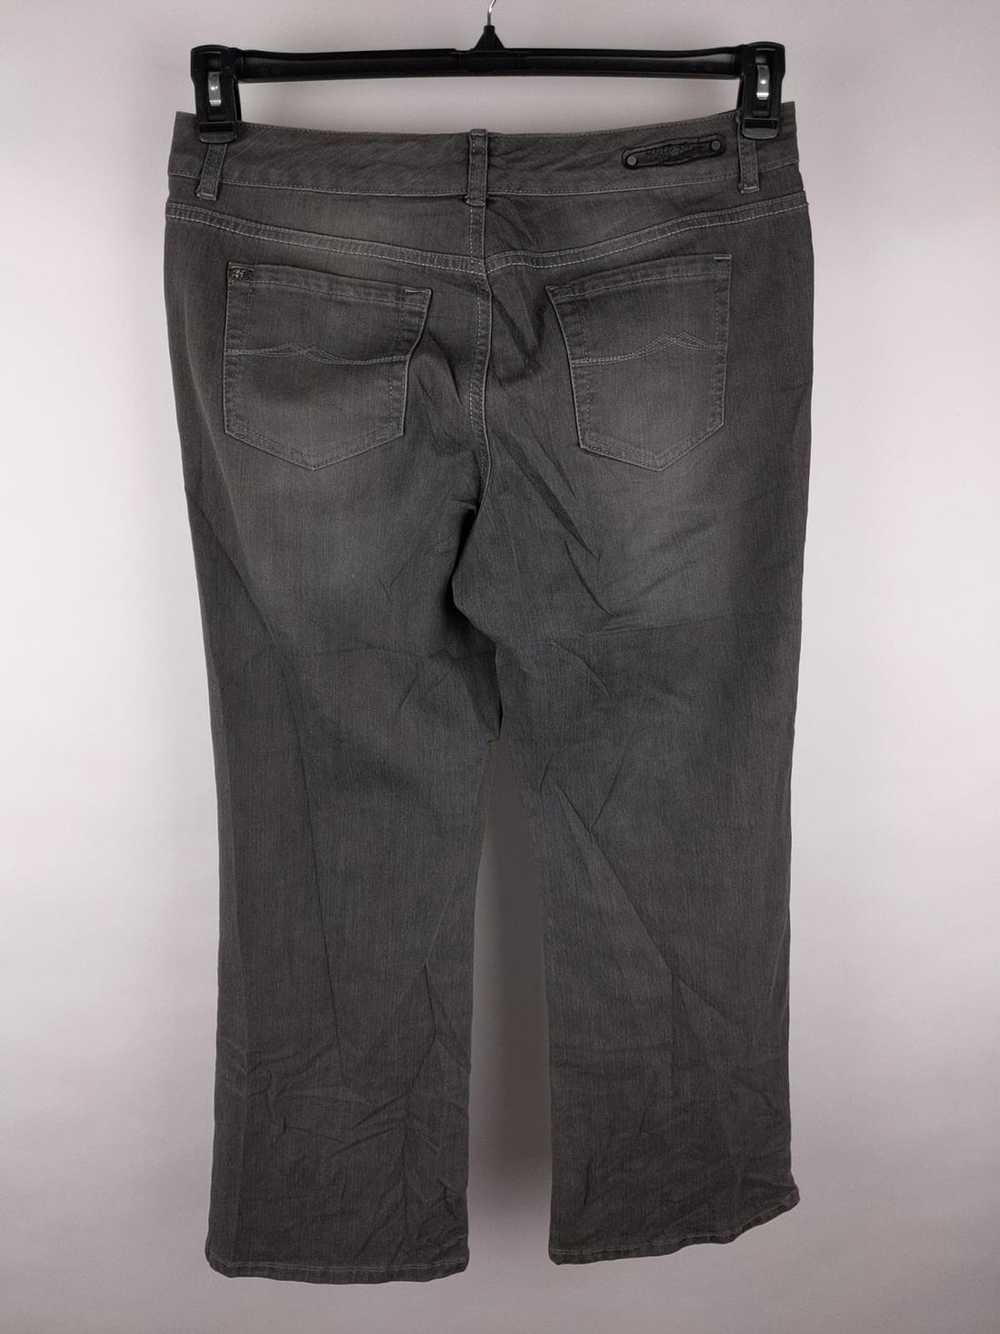 Ruff Hewn Bootcut Jeans - image 2